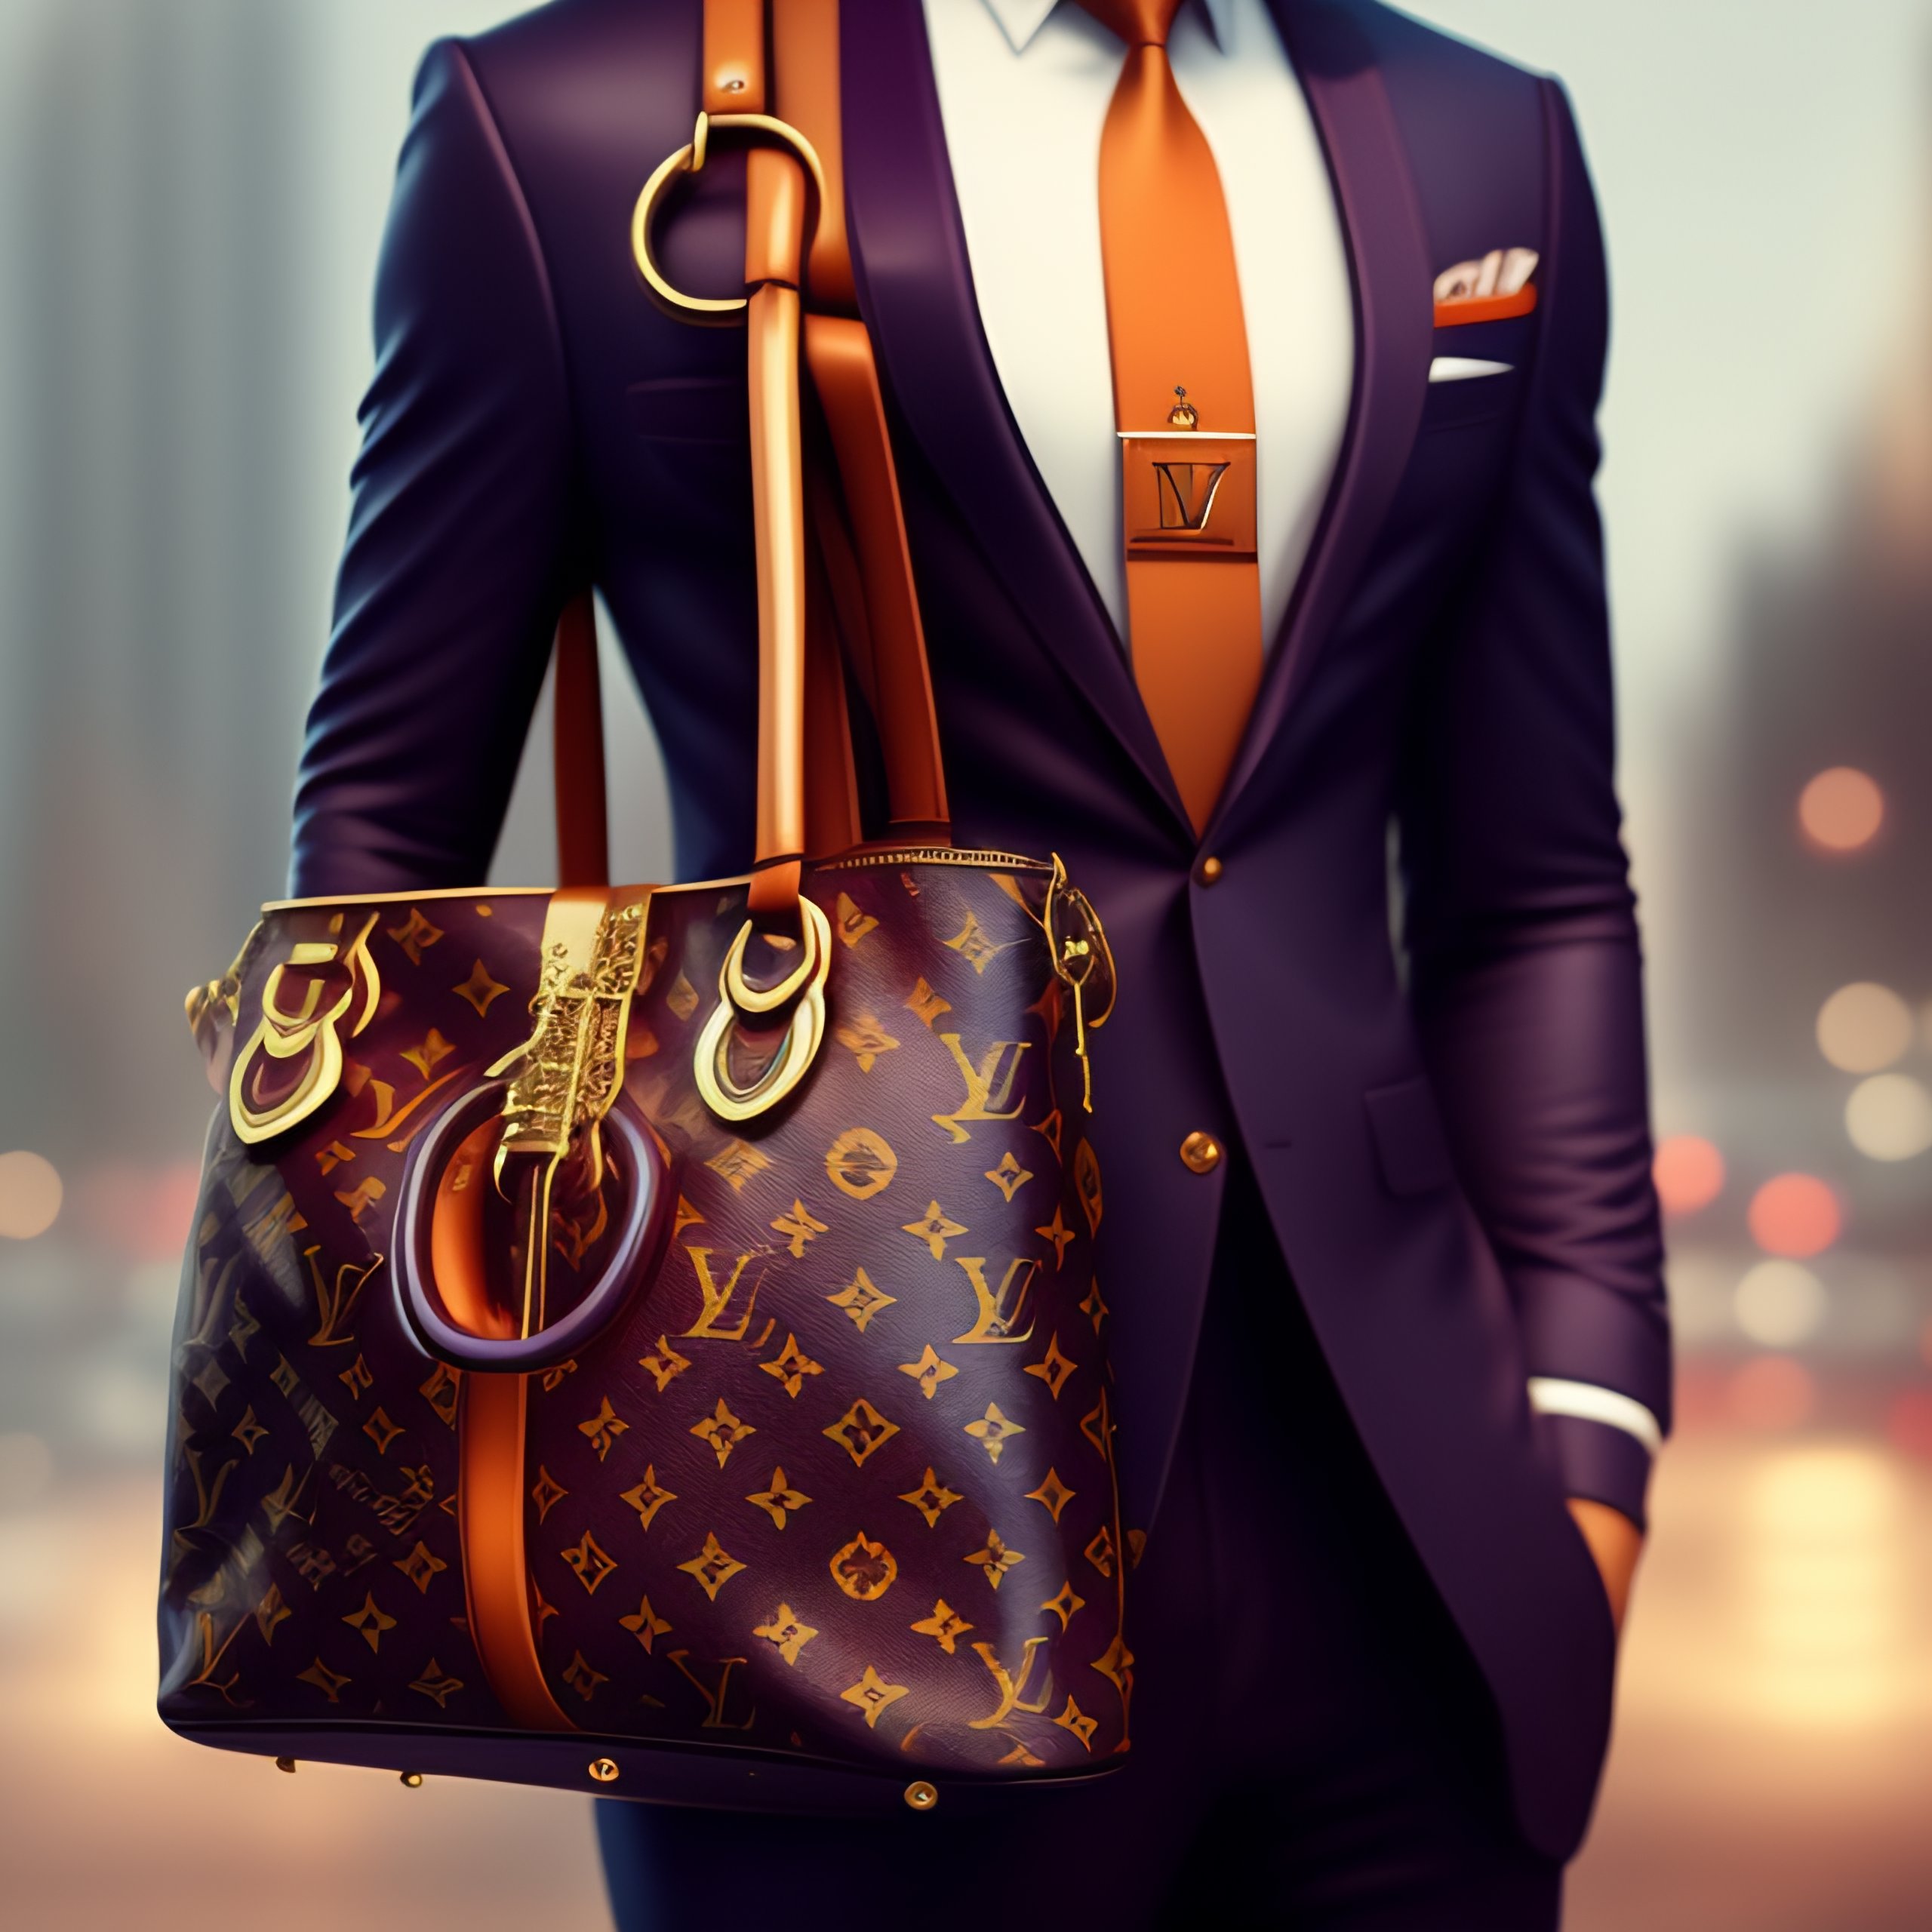 Lexica - LV three piece suit, LV handbag, mercedes key chain